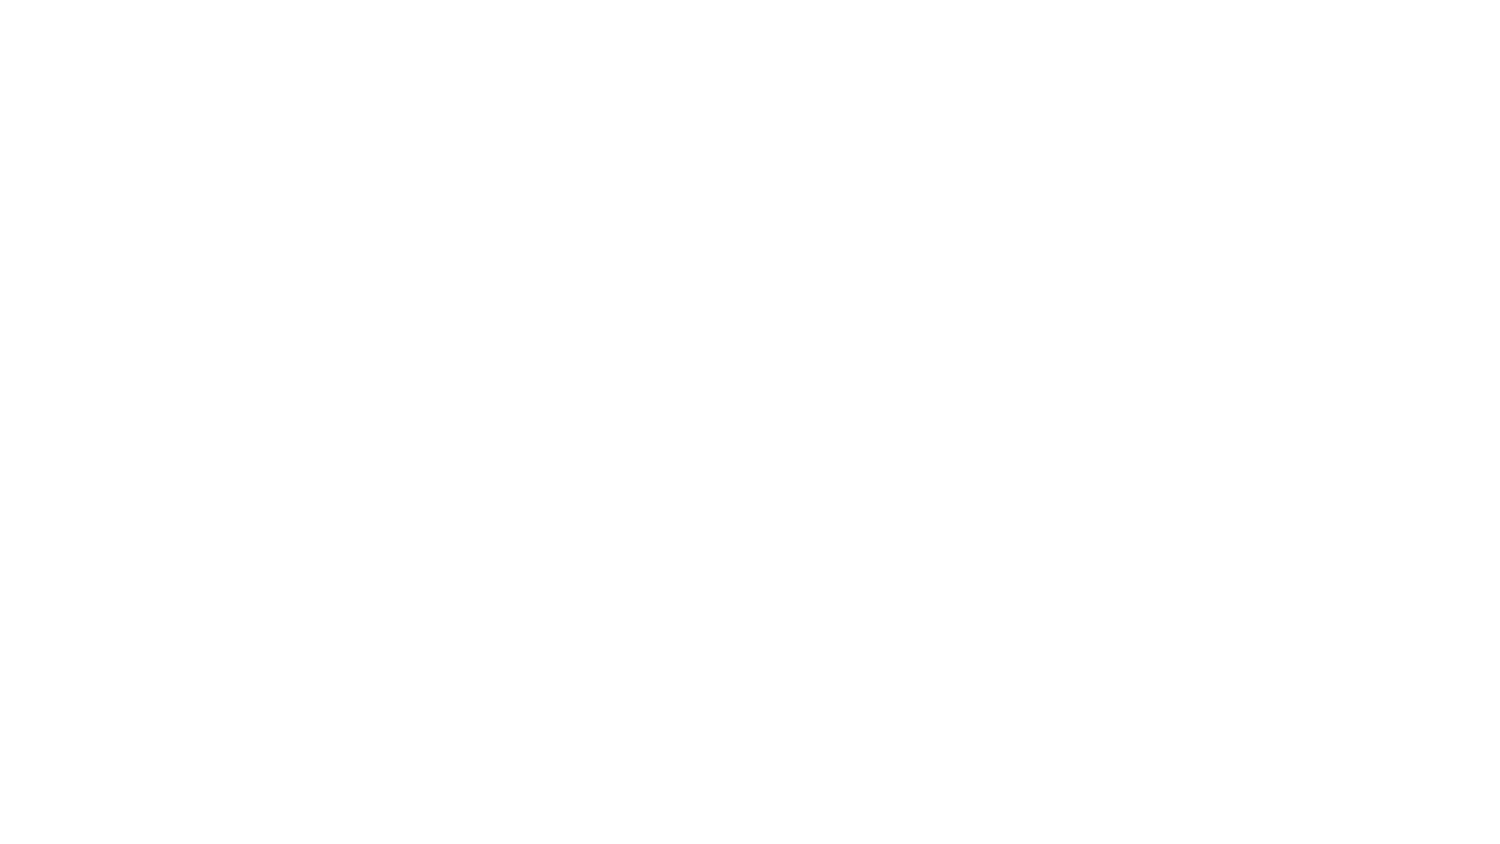 WICKER PARK FITNESS